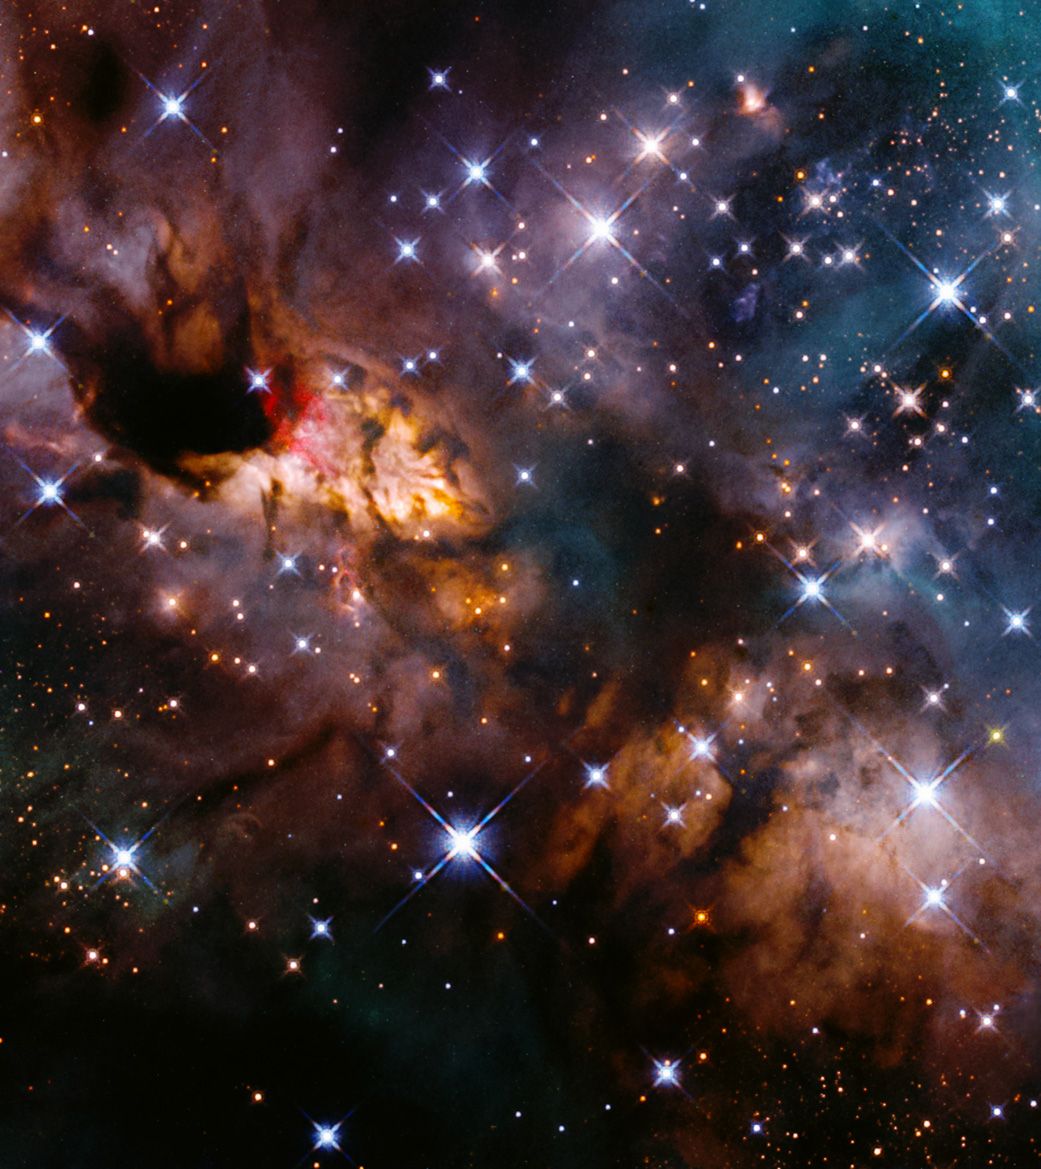 Hubble telescope captures stunning image of the star-forming Prawn Nebula